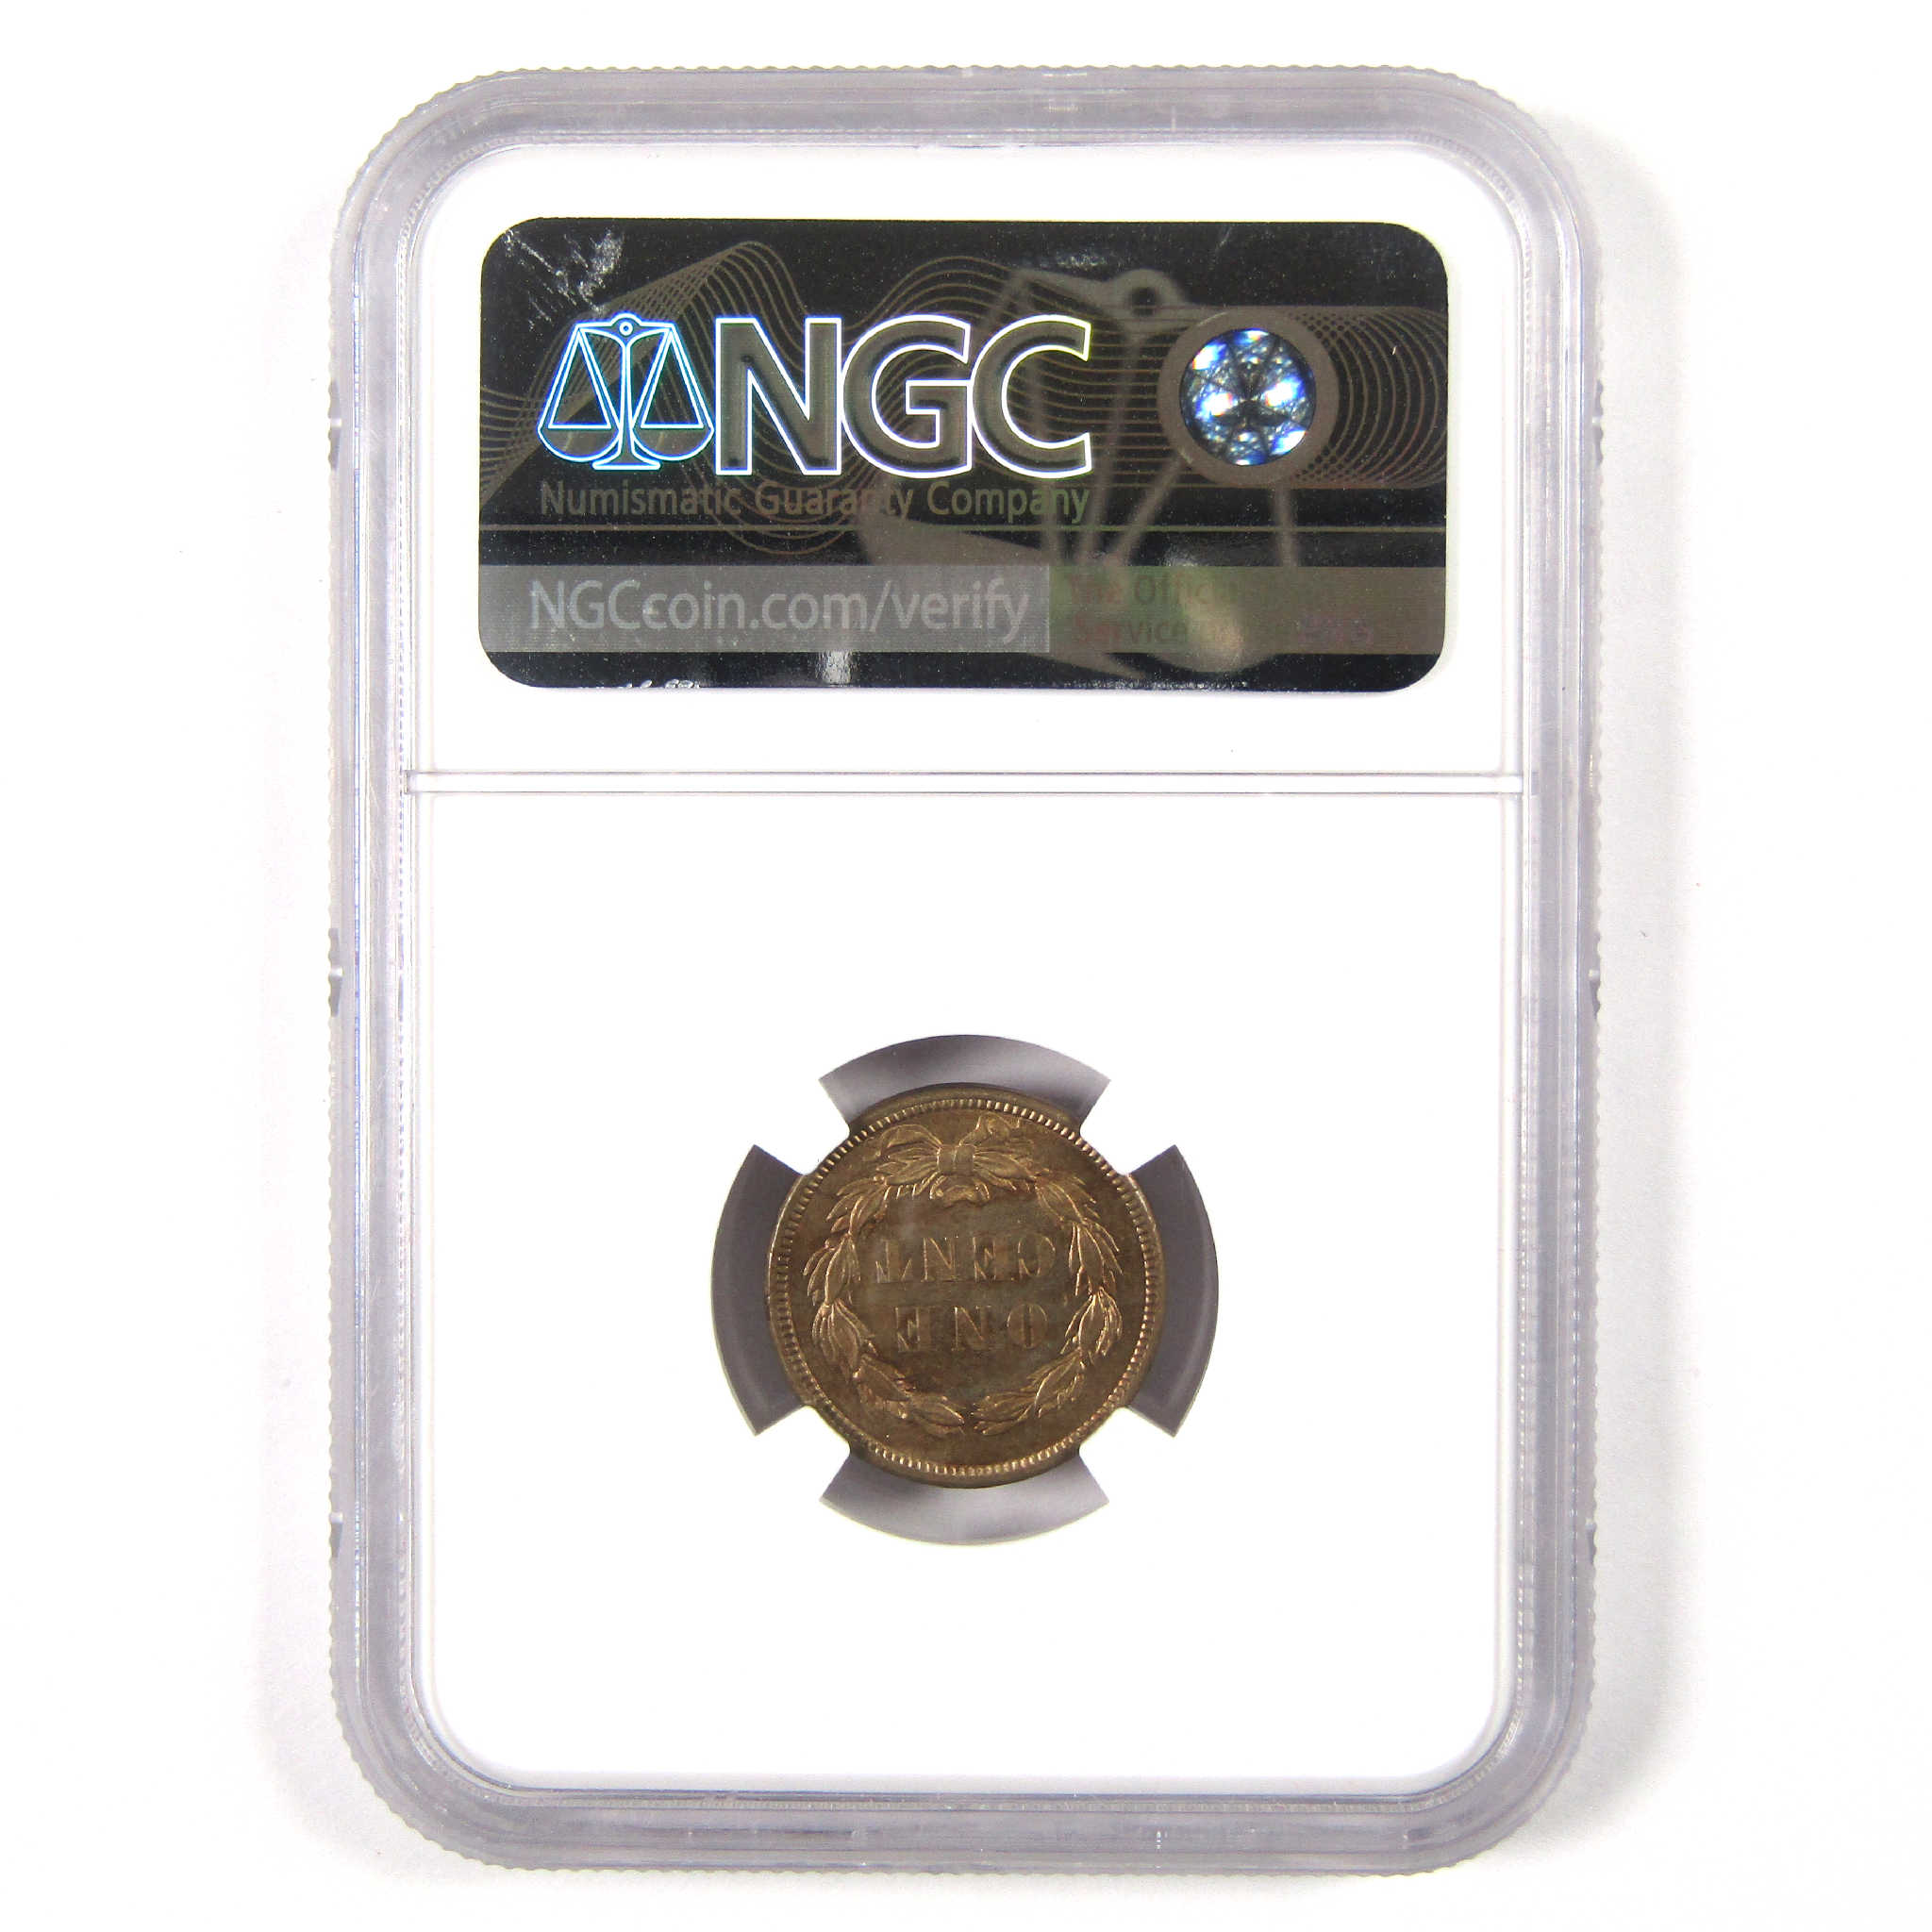 1859 Indian Head Cent MS 64 NGC Copper-Nickel 1c Unc SKU:I11384